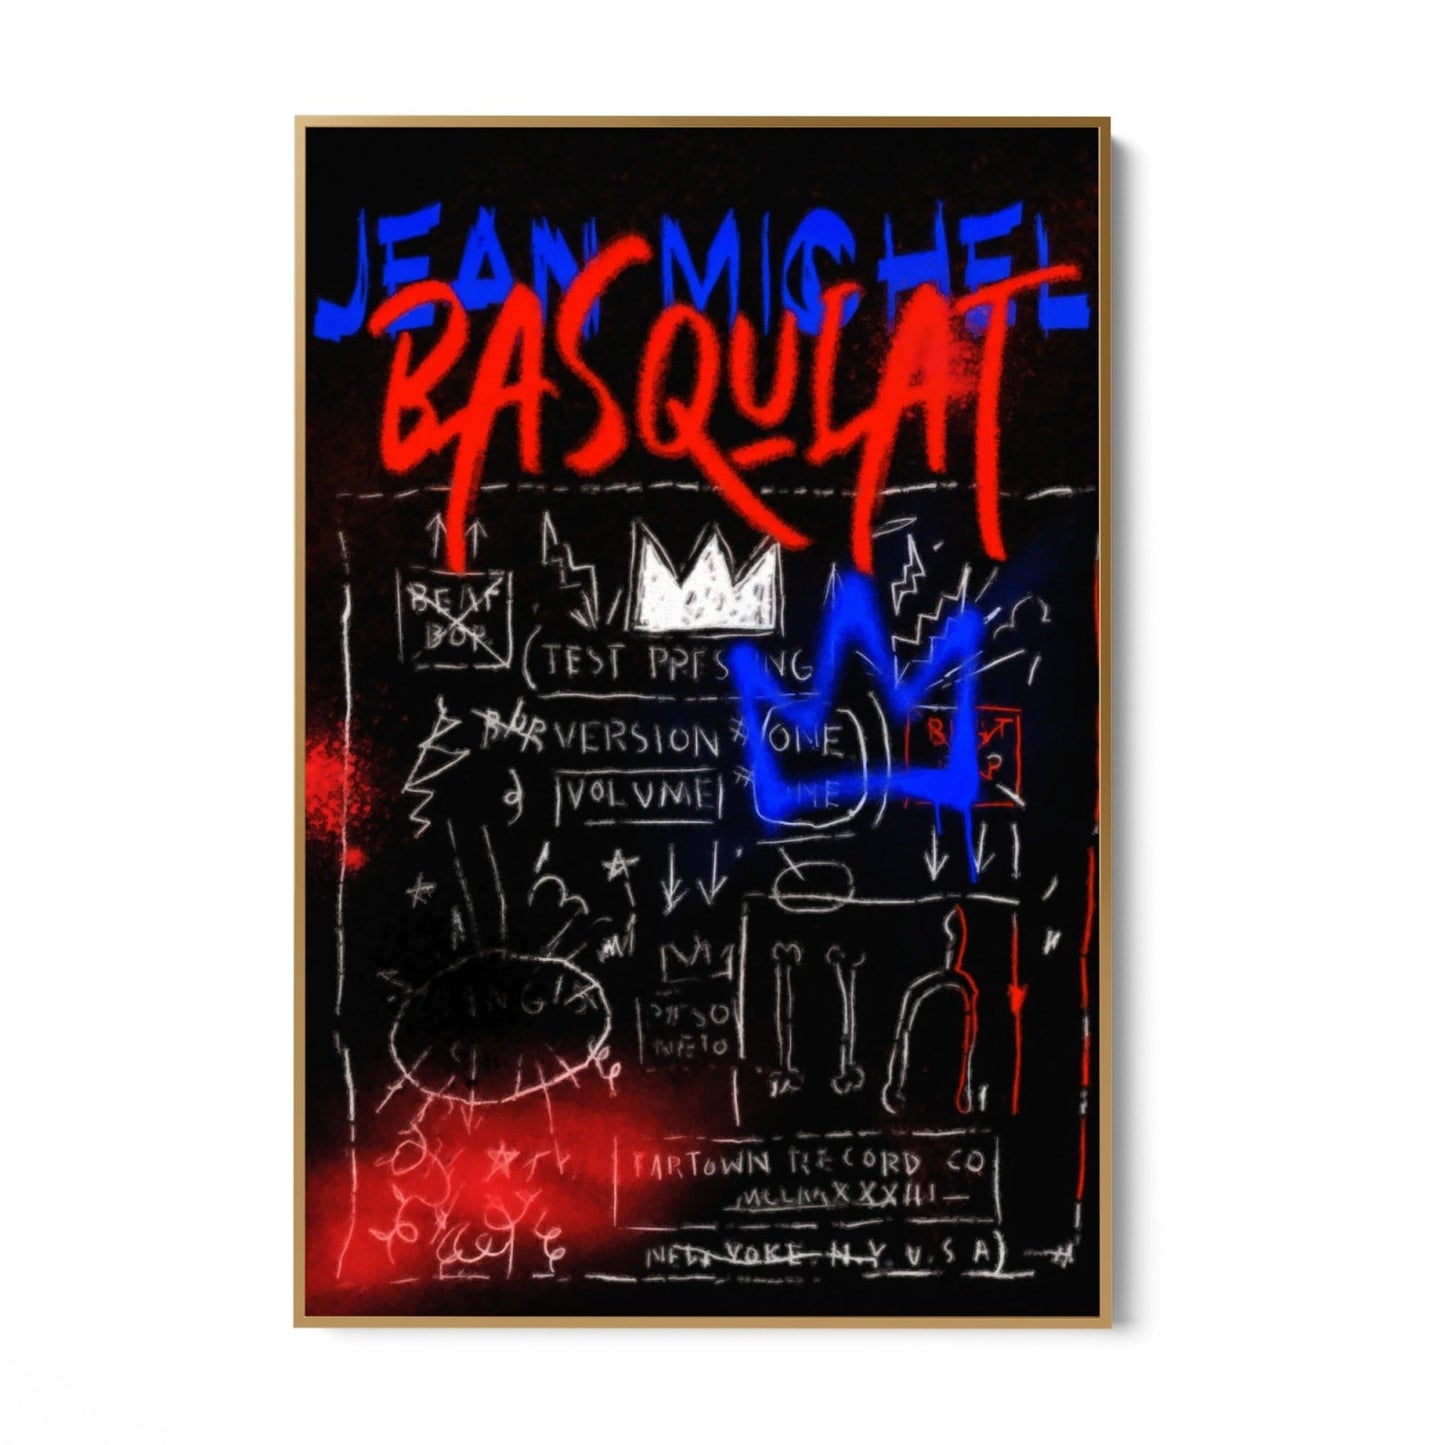 Basquiat sort